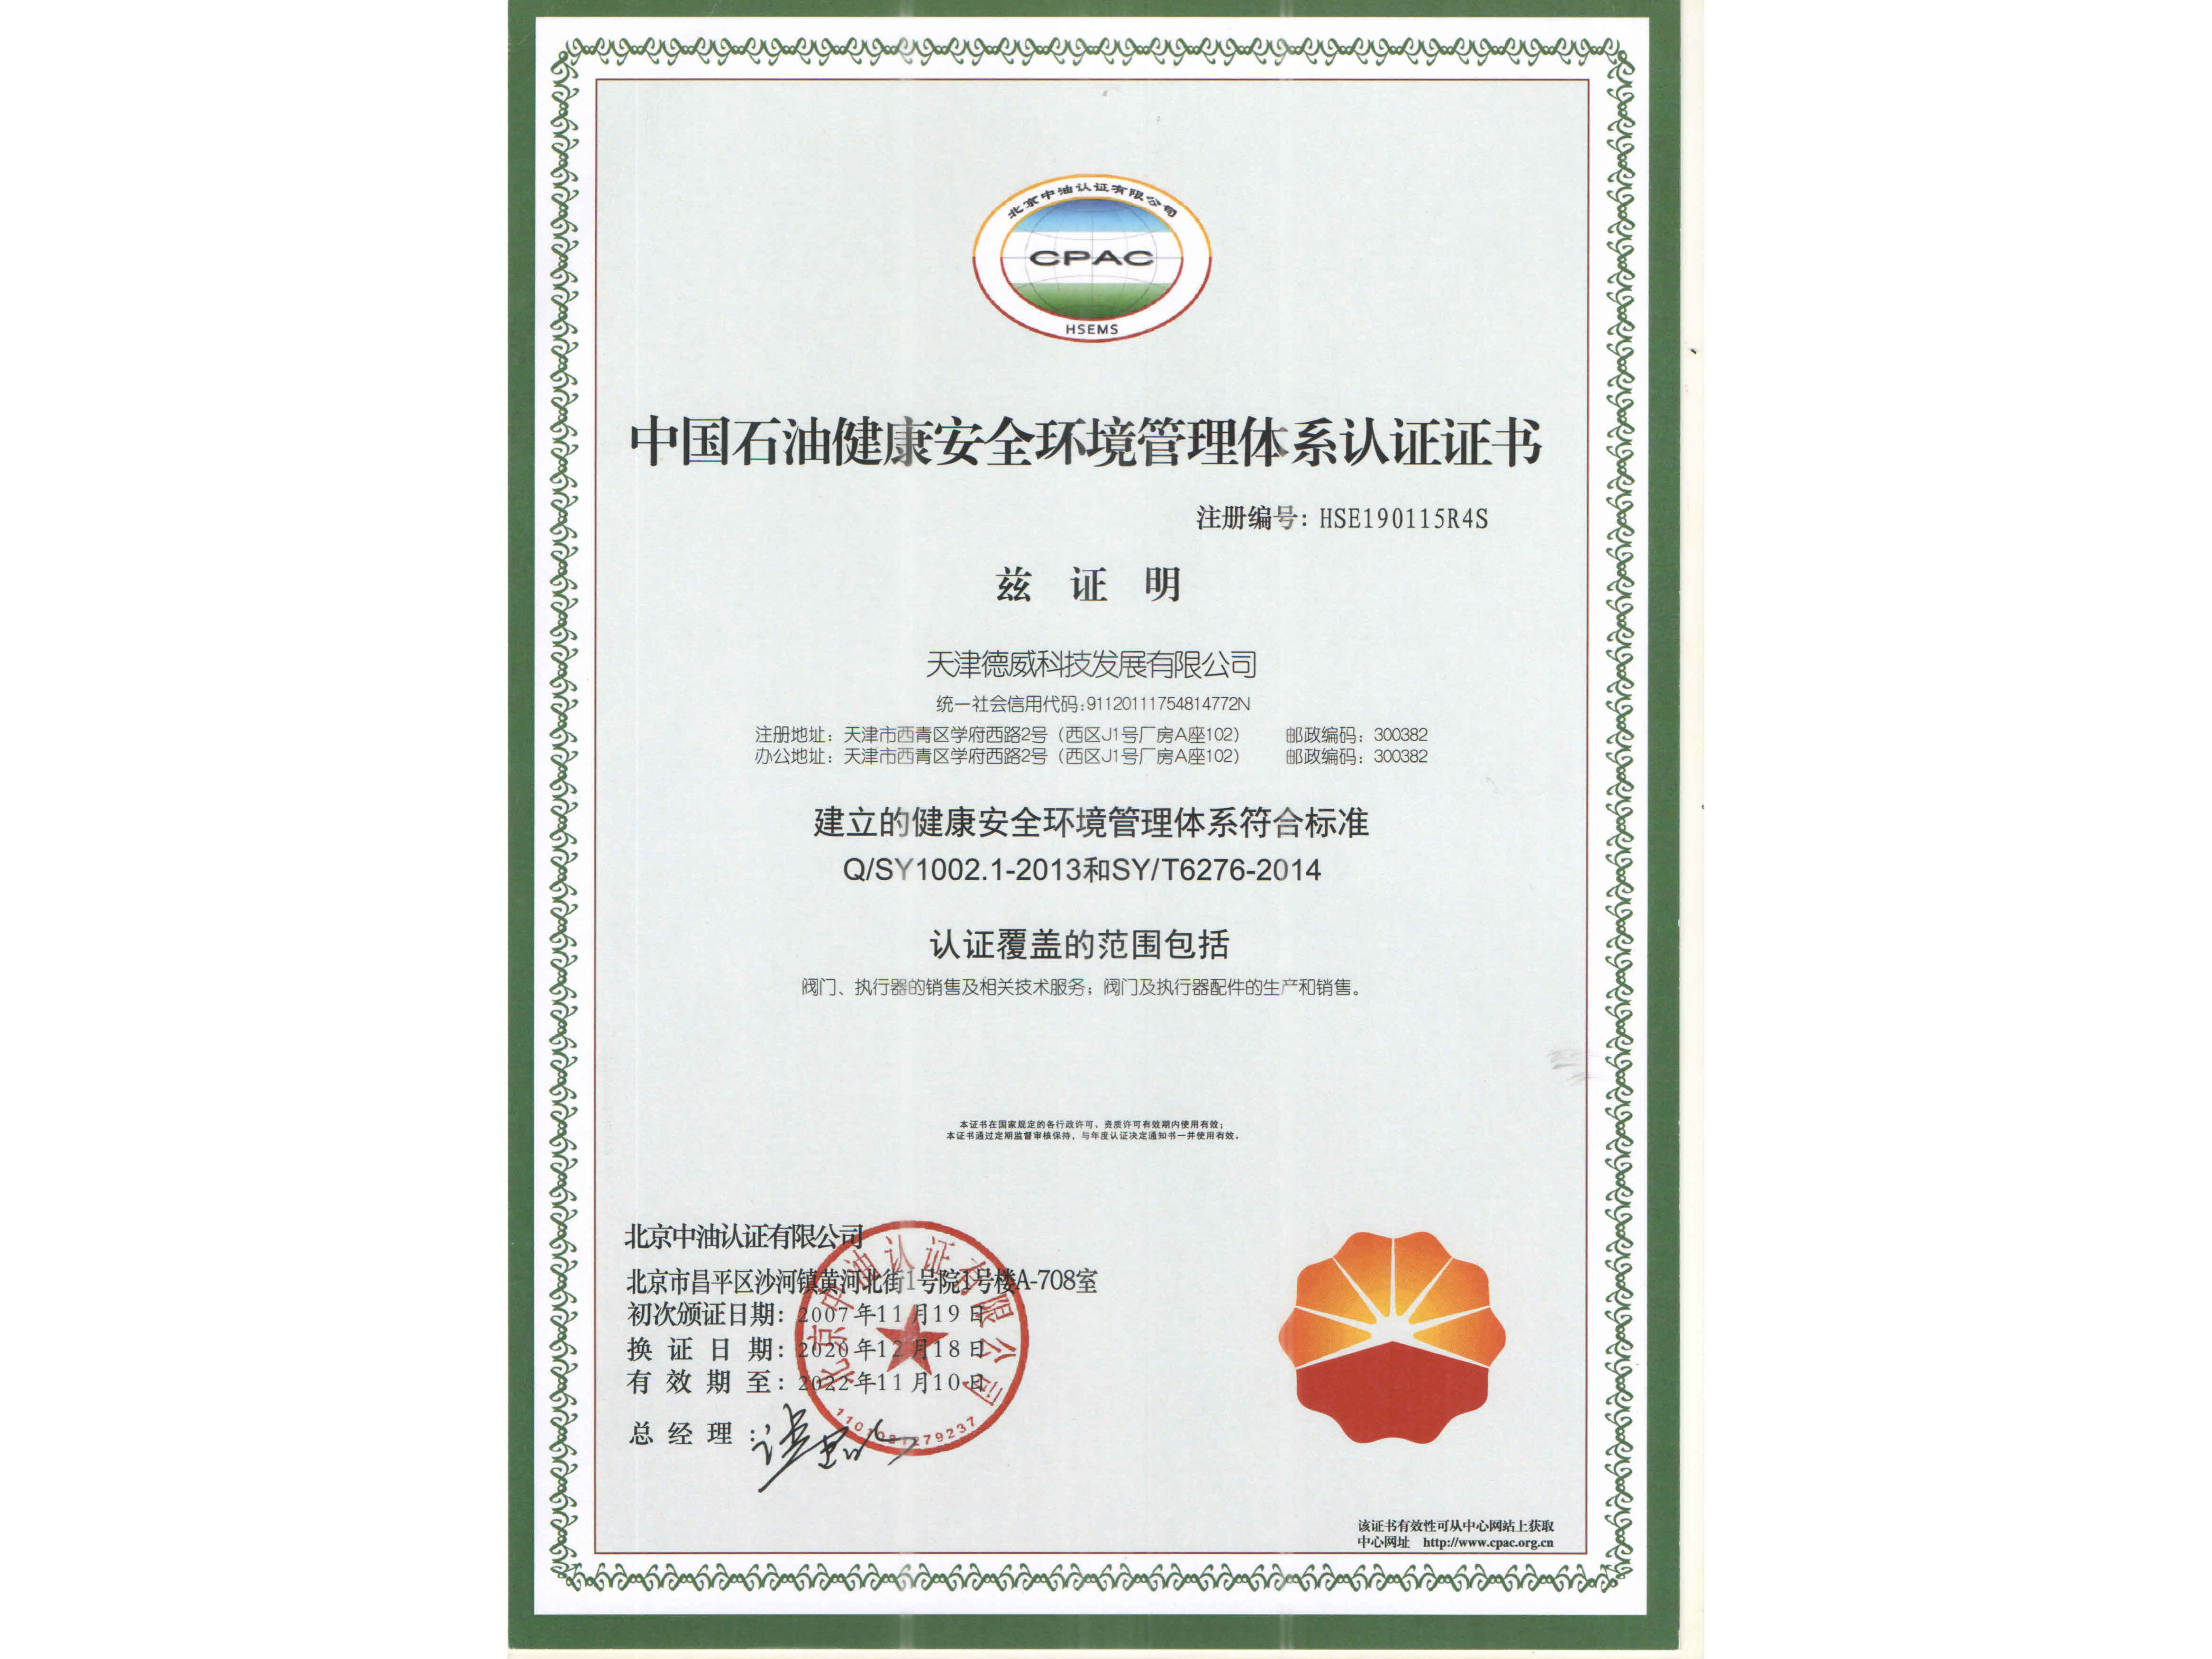 HSE certificate 20201218